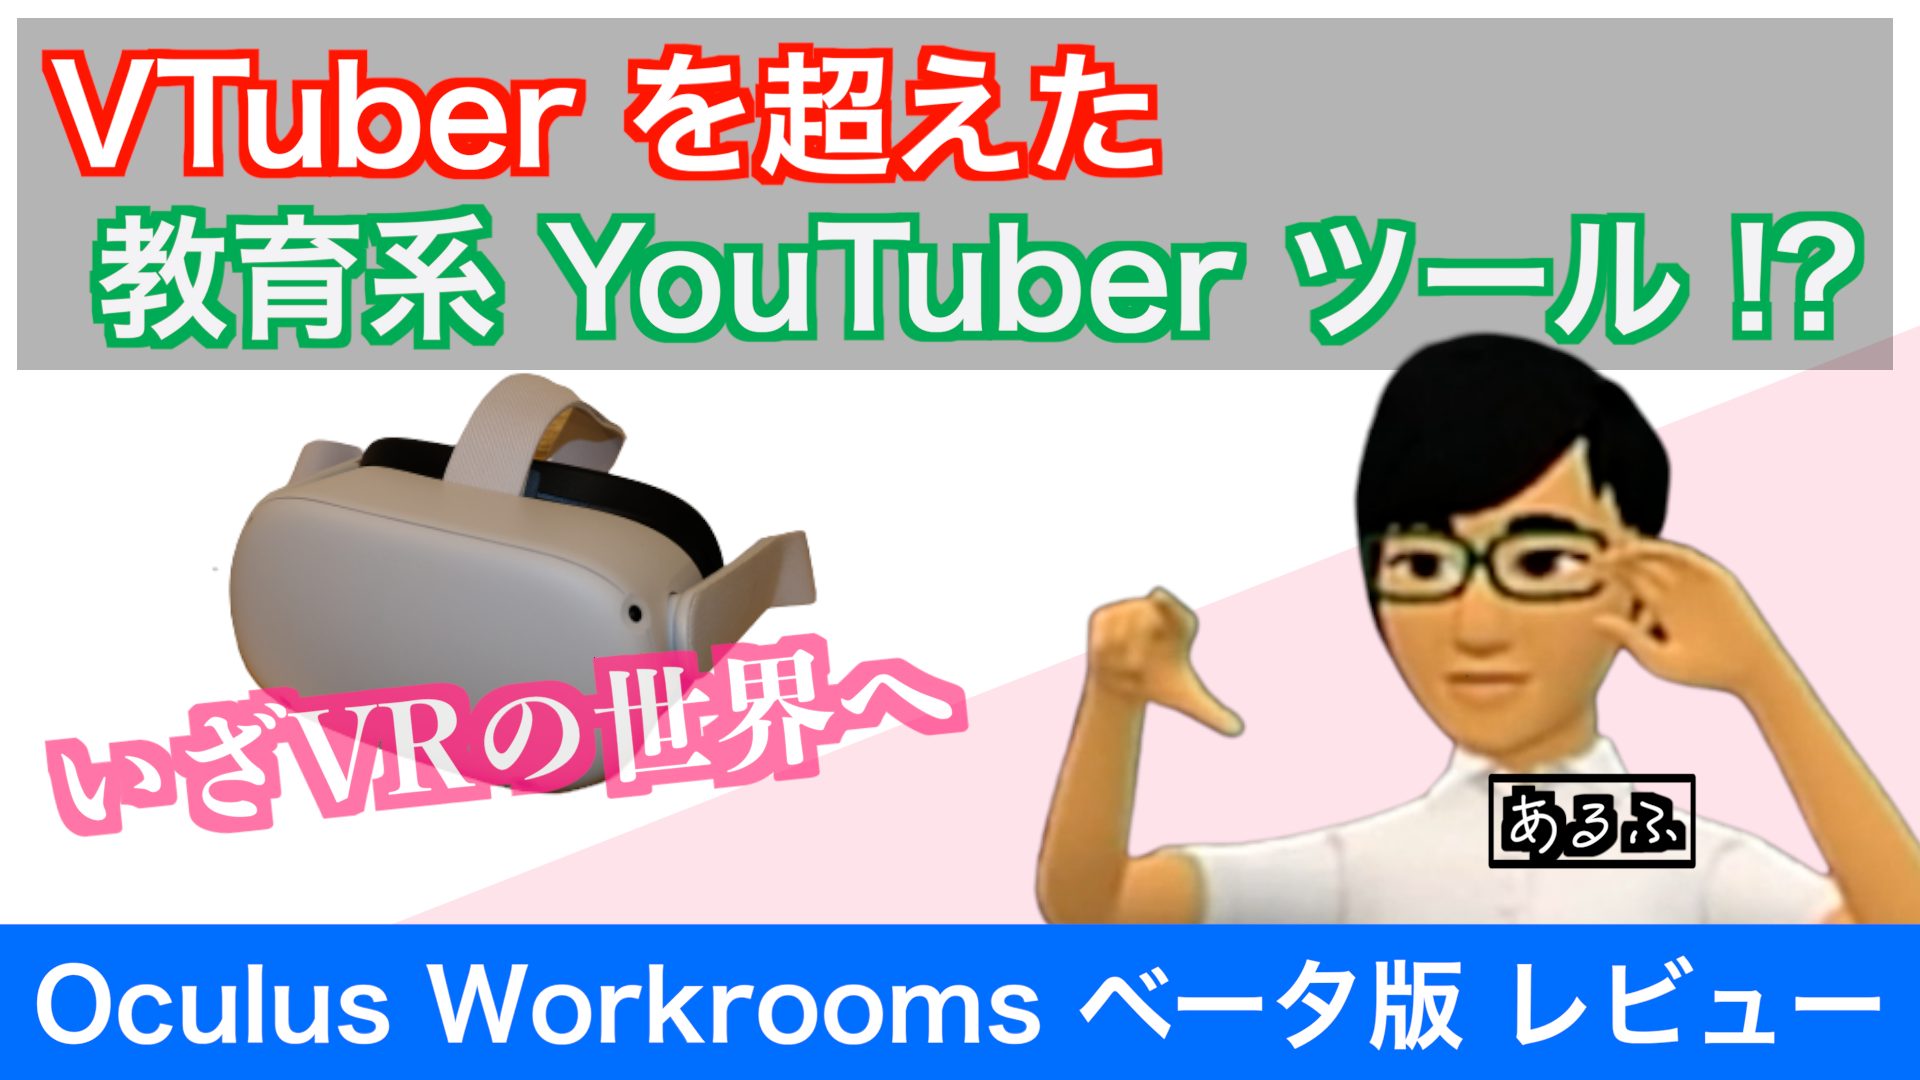 VTuberを超えた教育系YouTuberツール!? Oculus Workrooms ベータ版 レビュー